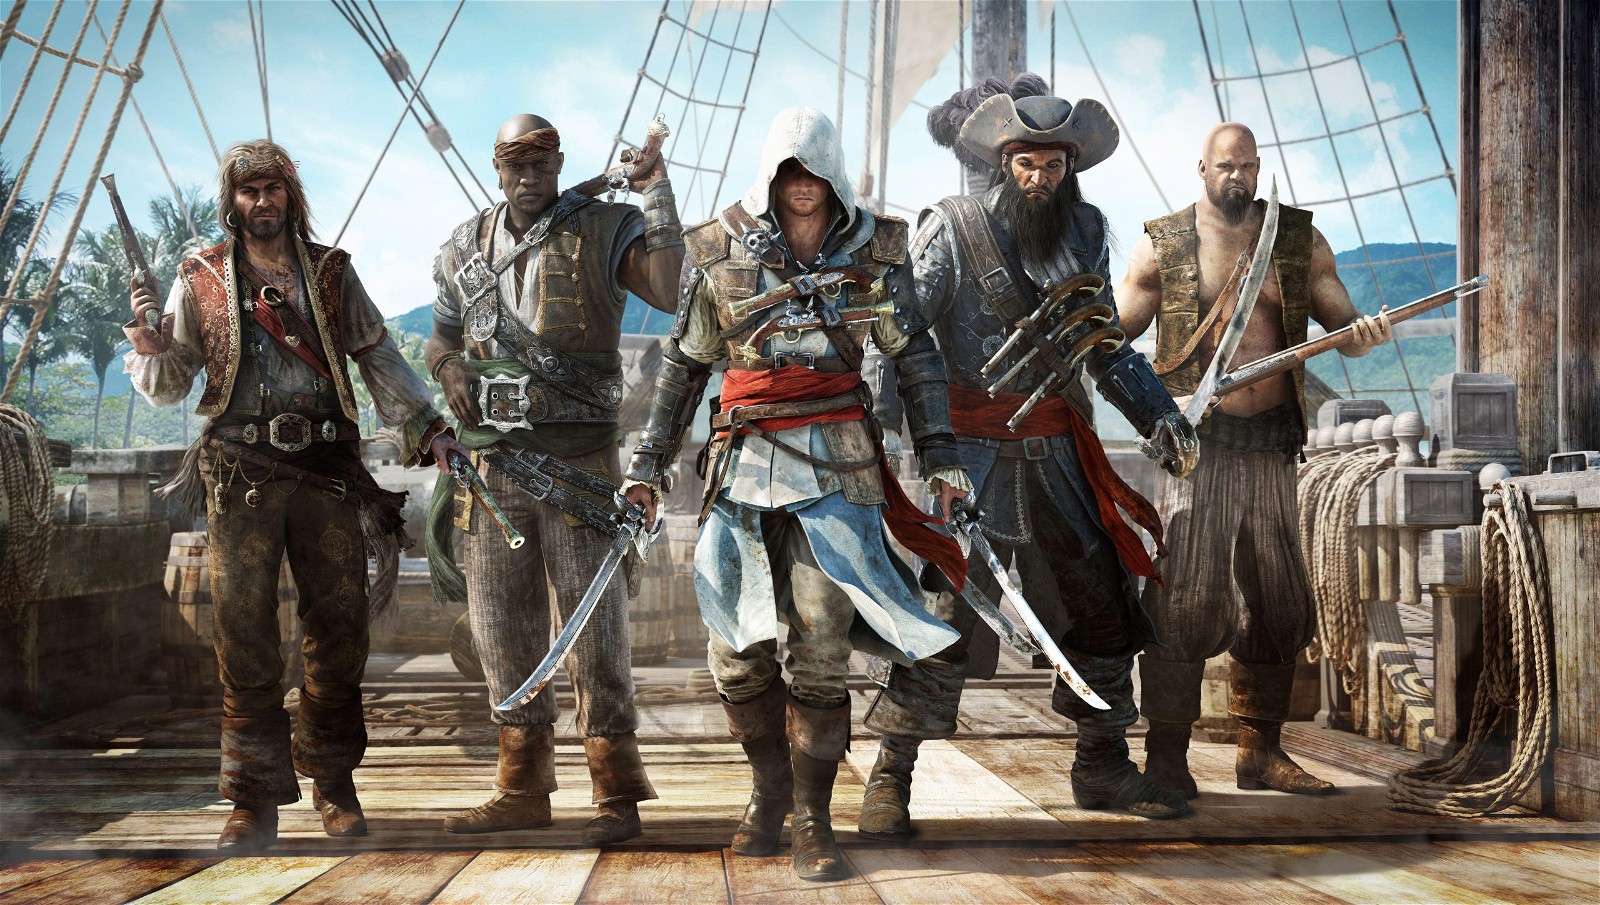 Screengrab from Assassin's Creed Black Flag